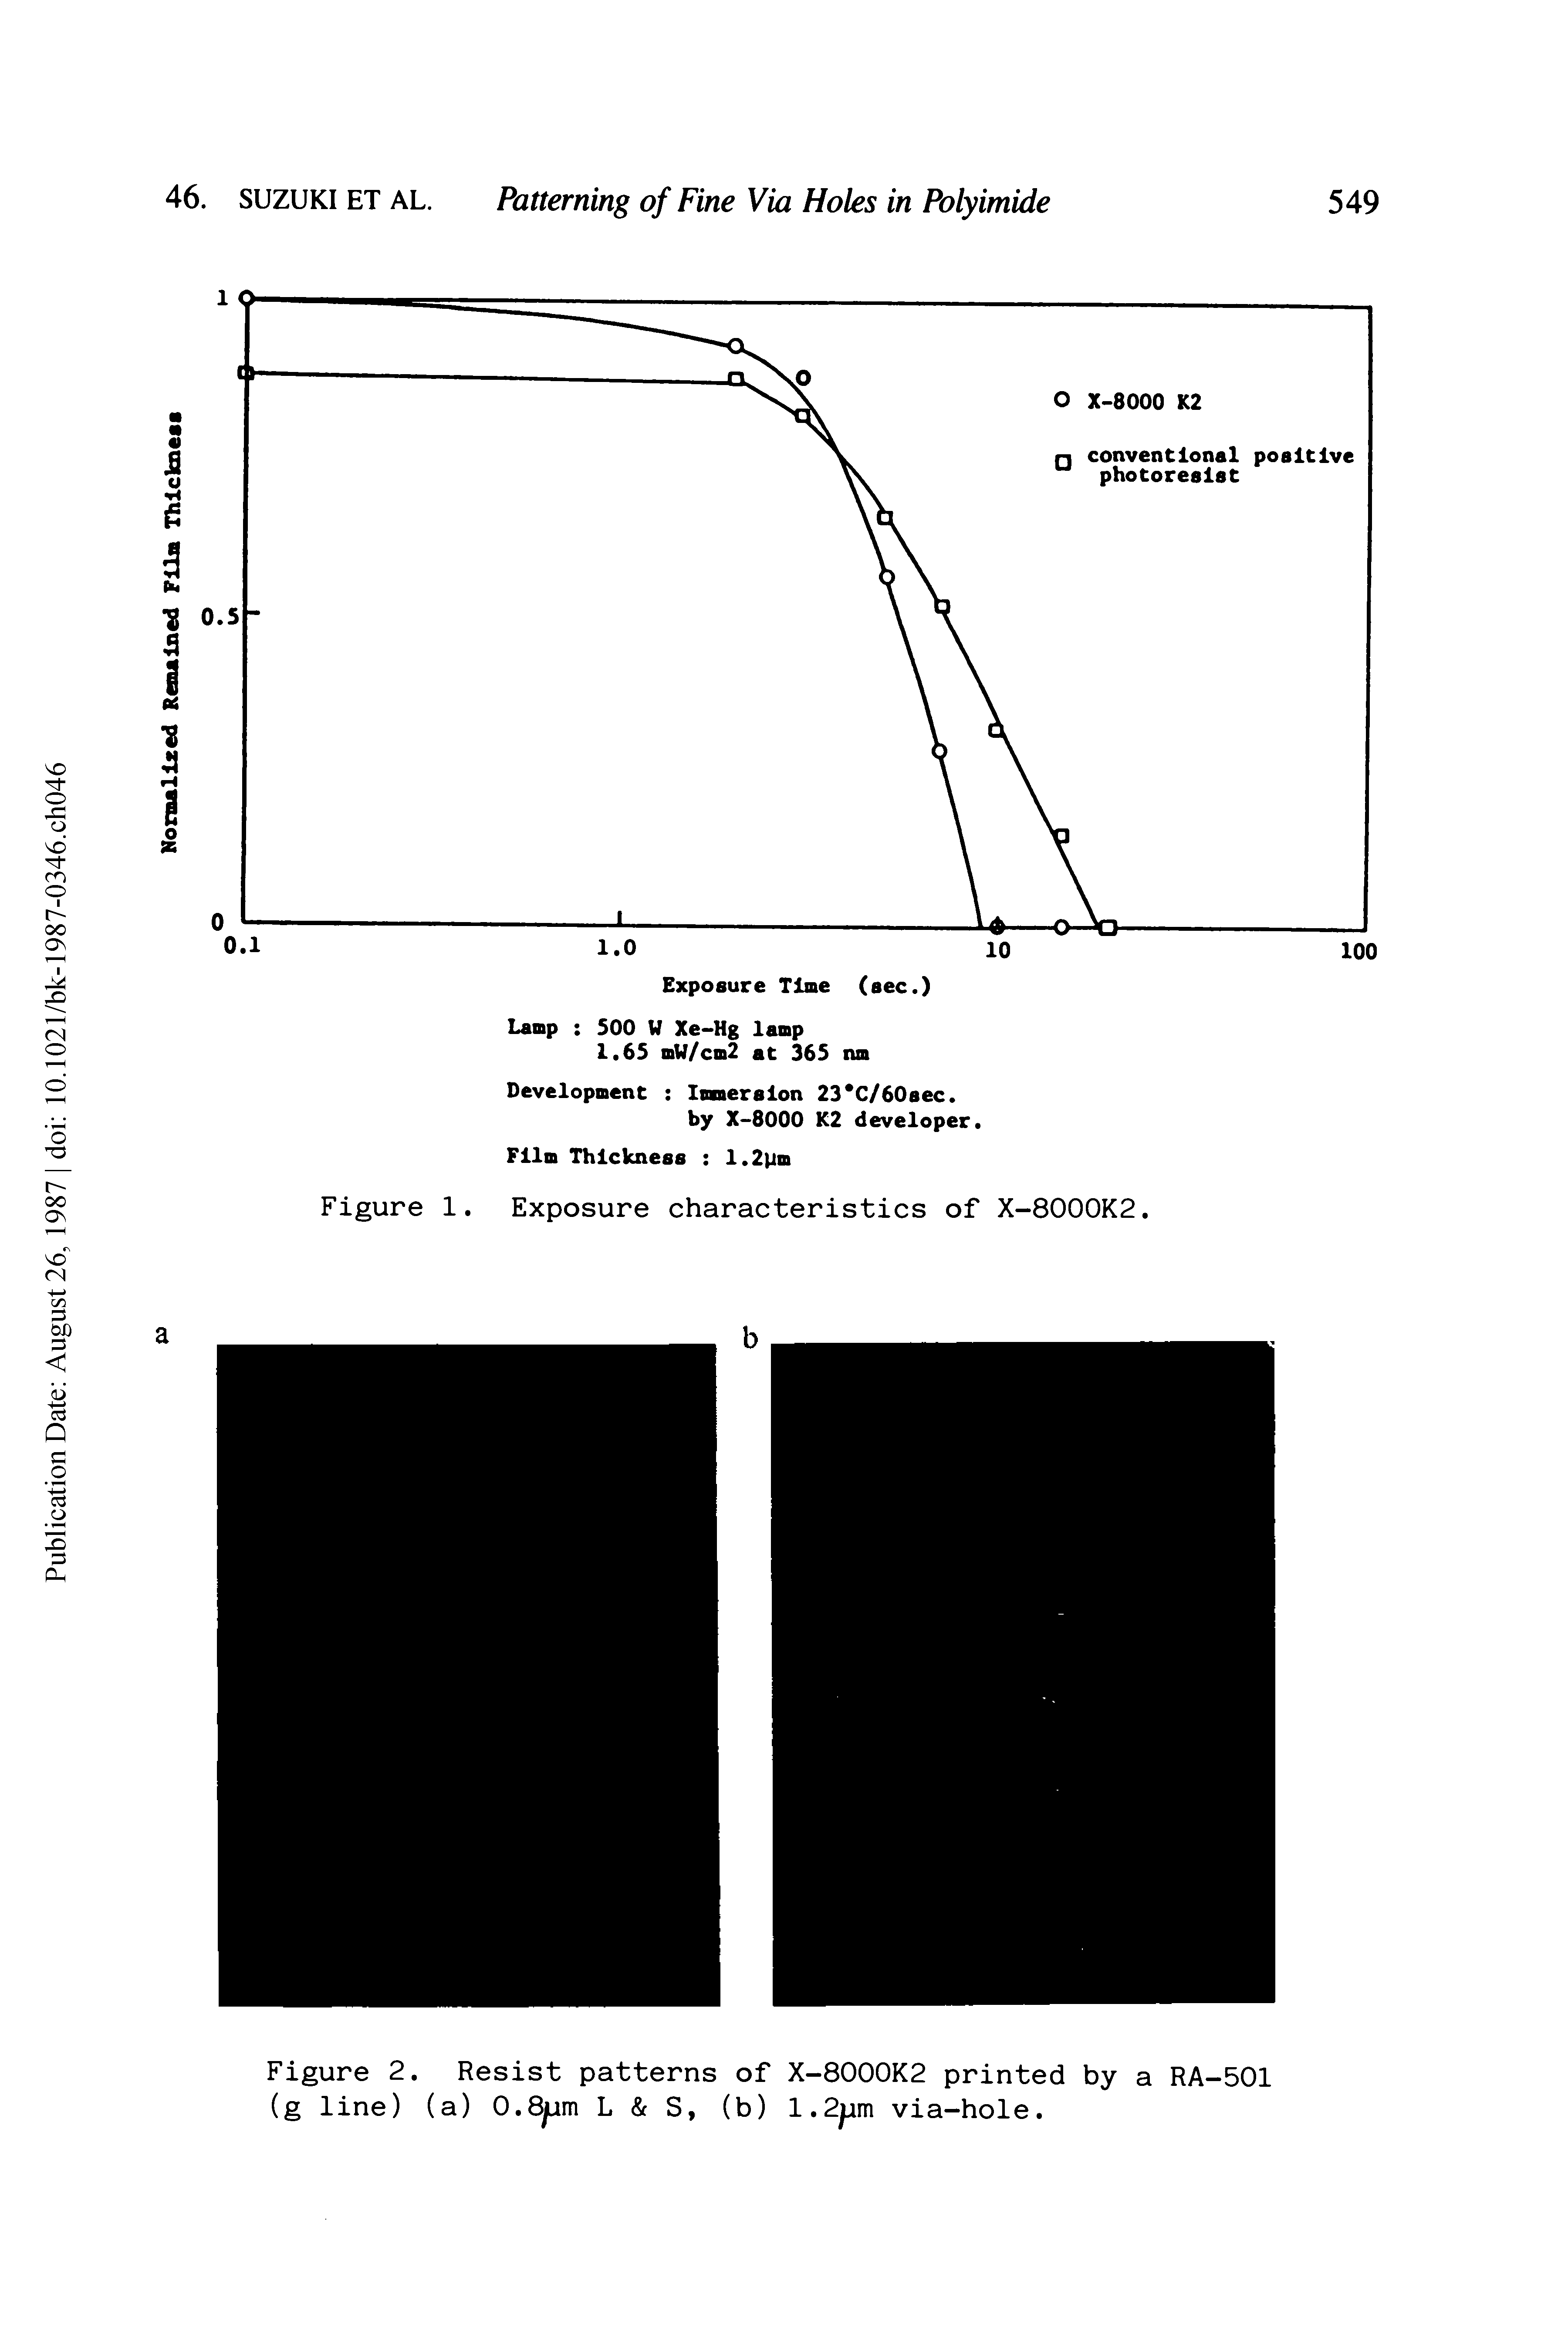 Figure 2. Resist patterns of X-8000K2 printed by a RA-501 (g line) (a) 0.8jum L S, (b) 1.2pm via-hole.